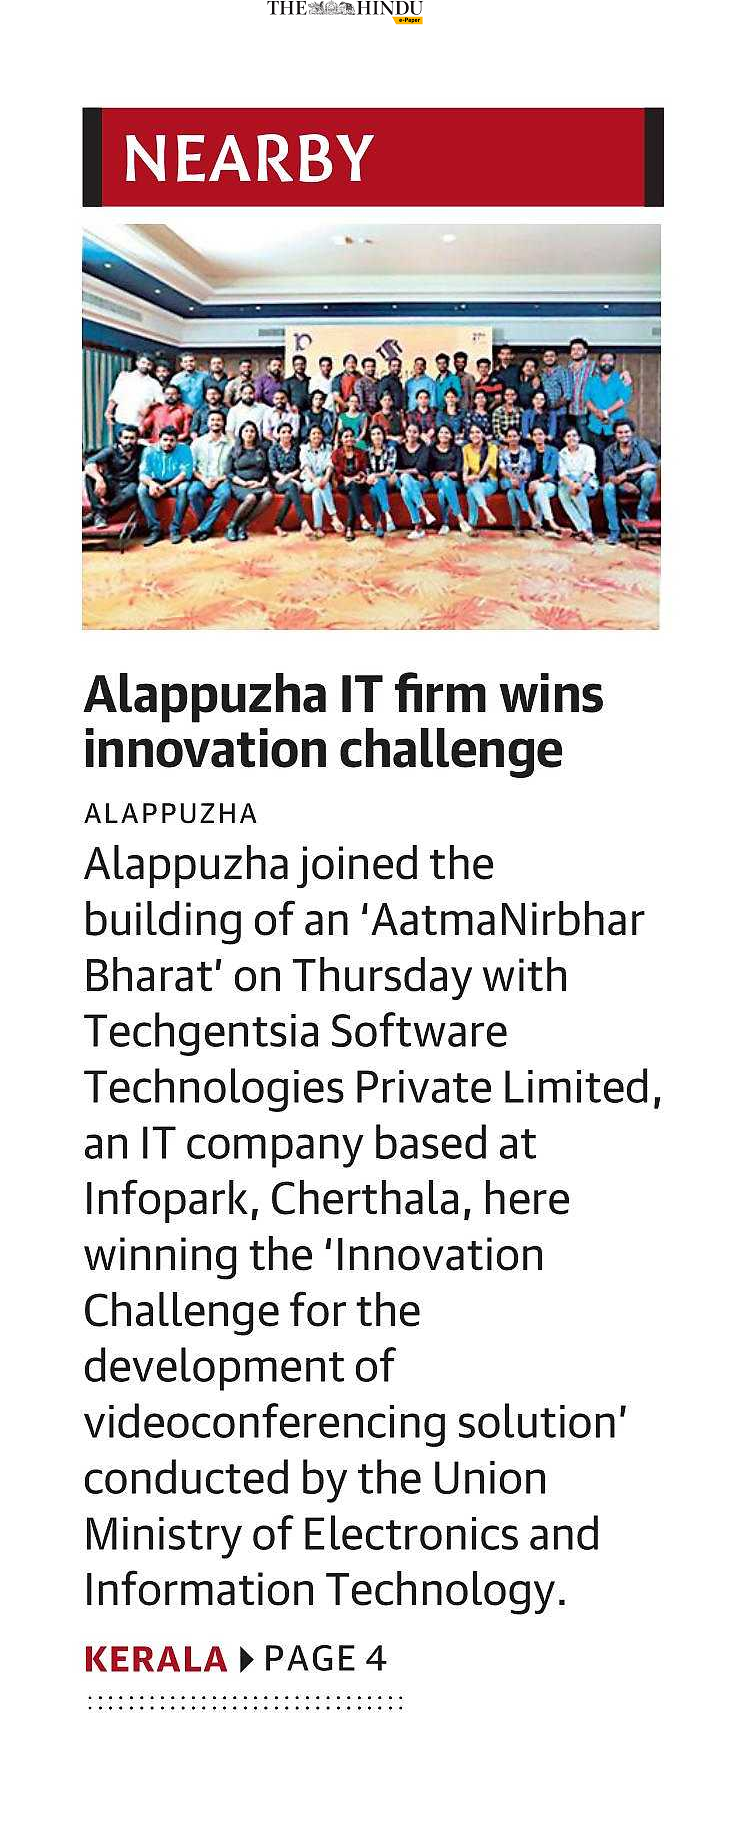 Alappuzha IT firm wins innovation challenge